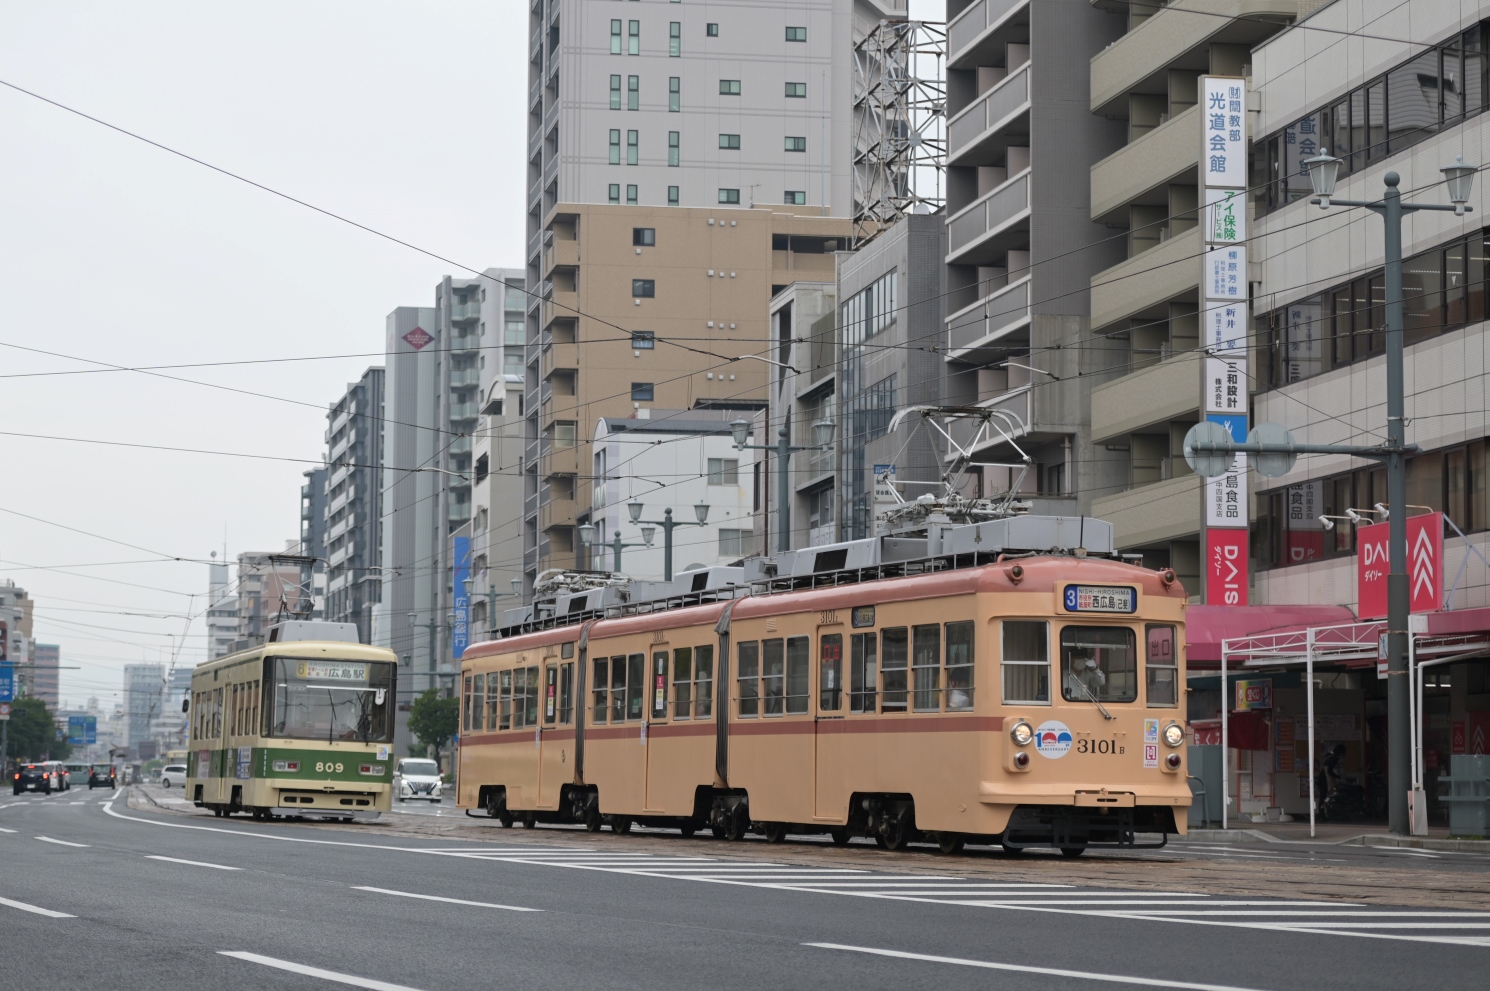 Хиросима, Aruna Kōki № 809; Хиросима, Green Liner Hiroshima series 3100 № 3101